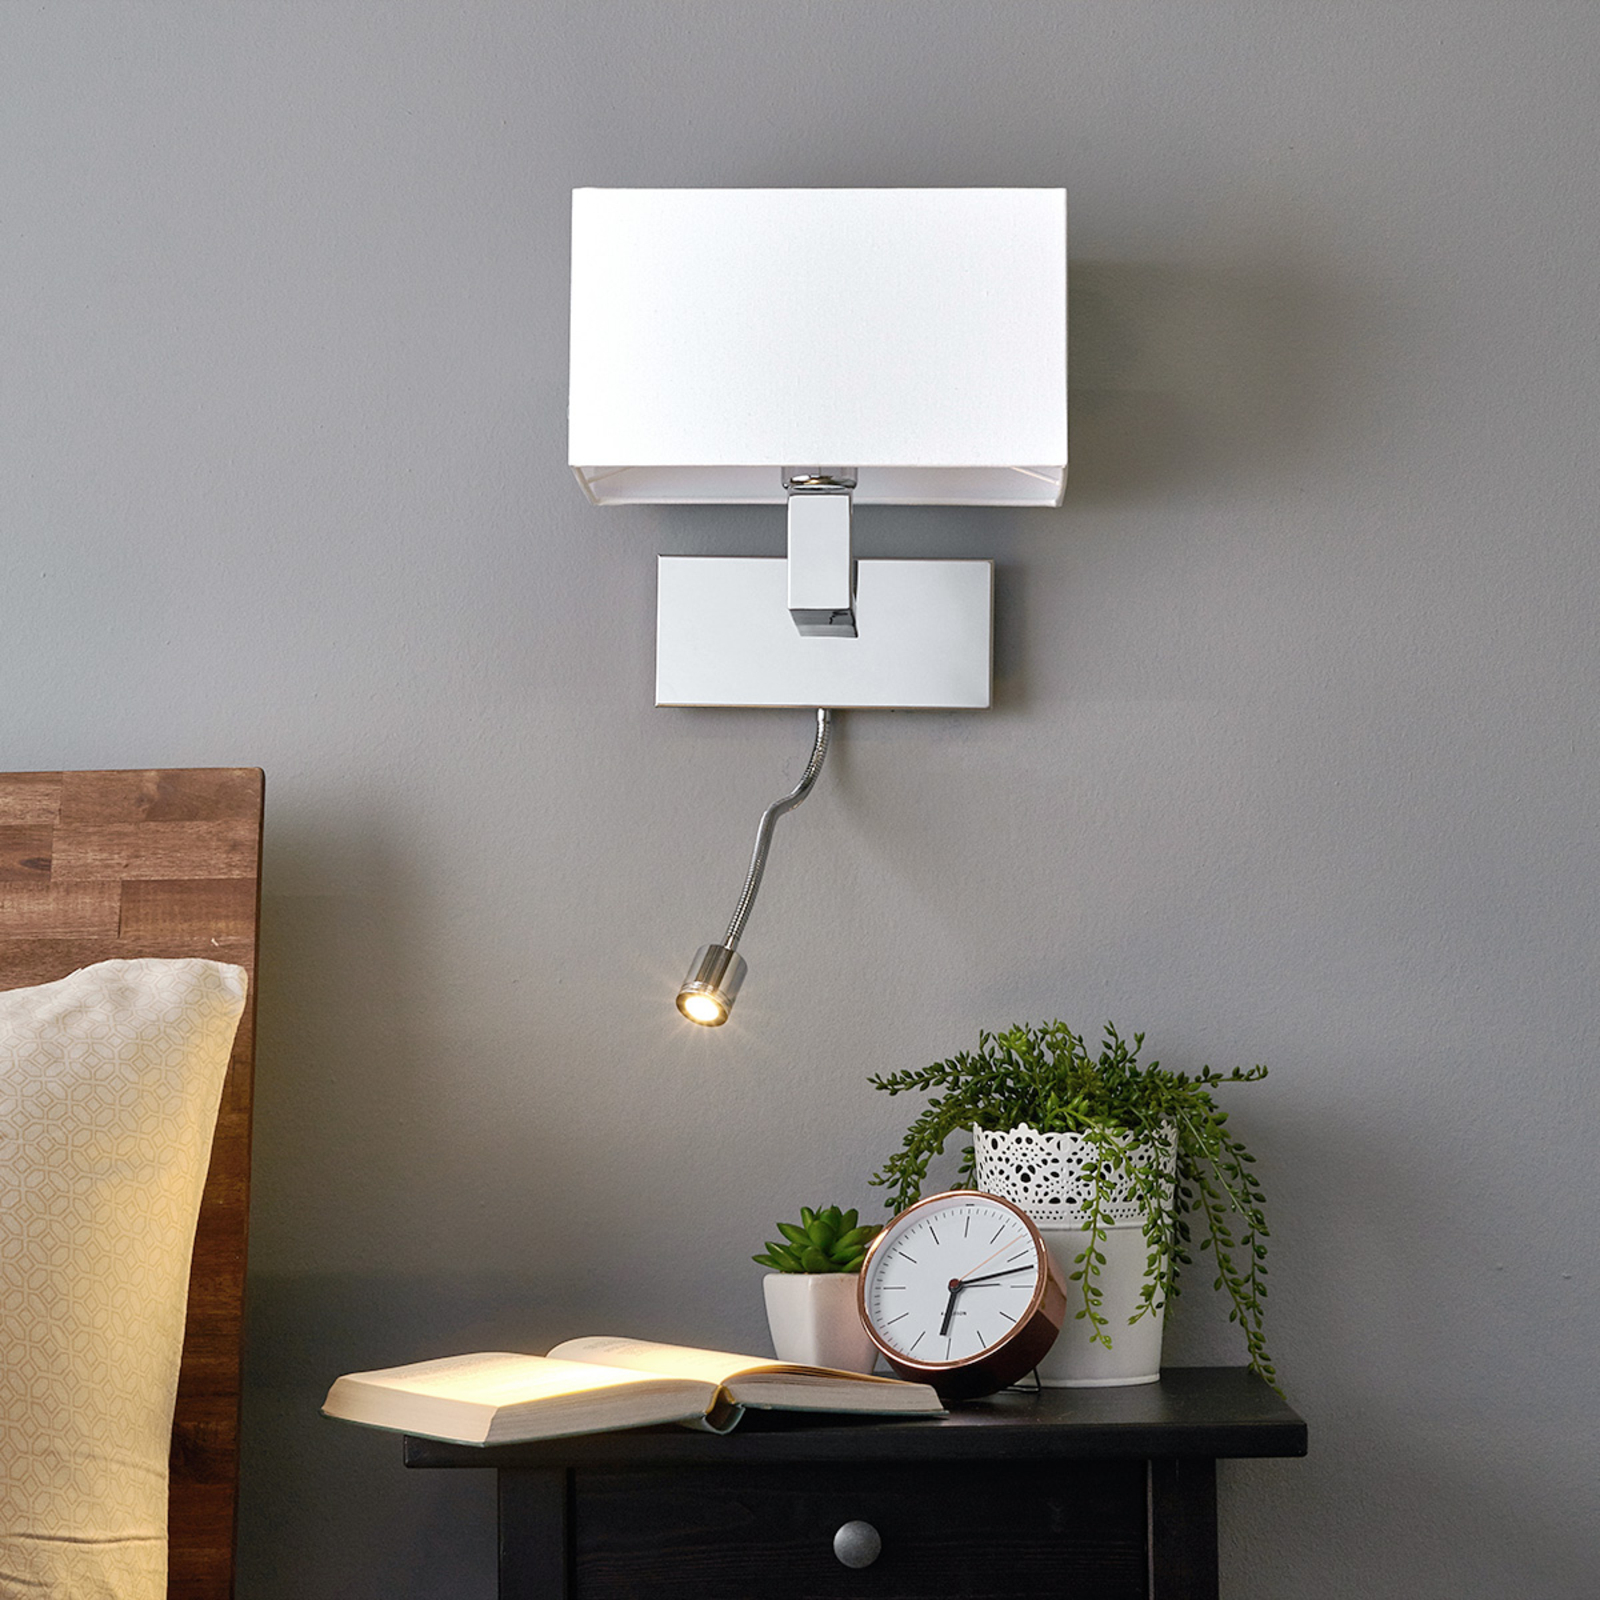 Lucande Tamara wall light, white, switch, LED flex arm